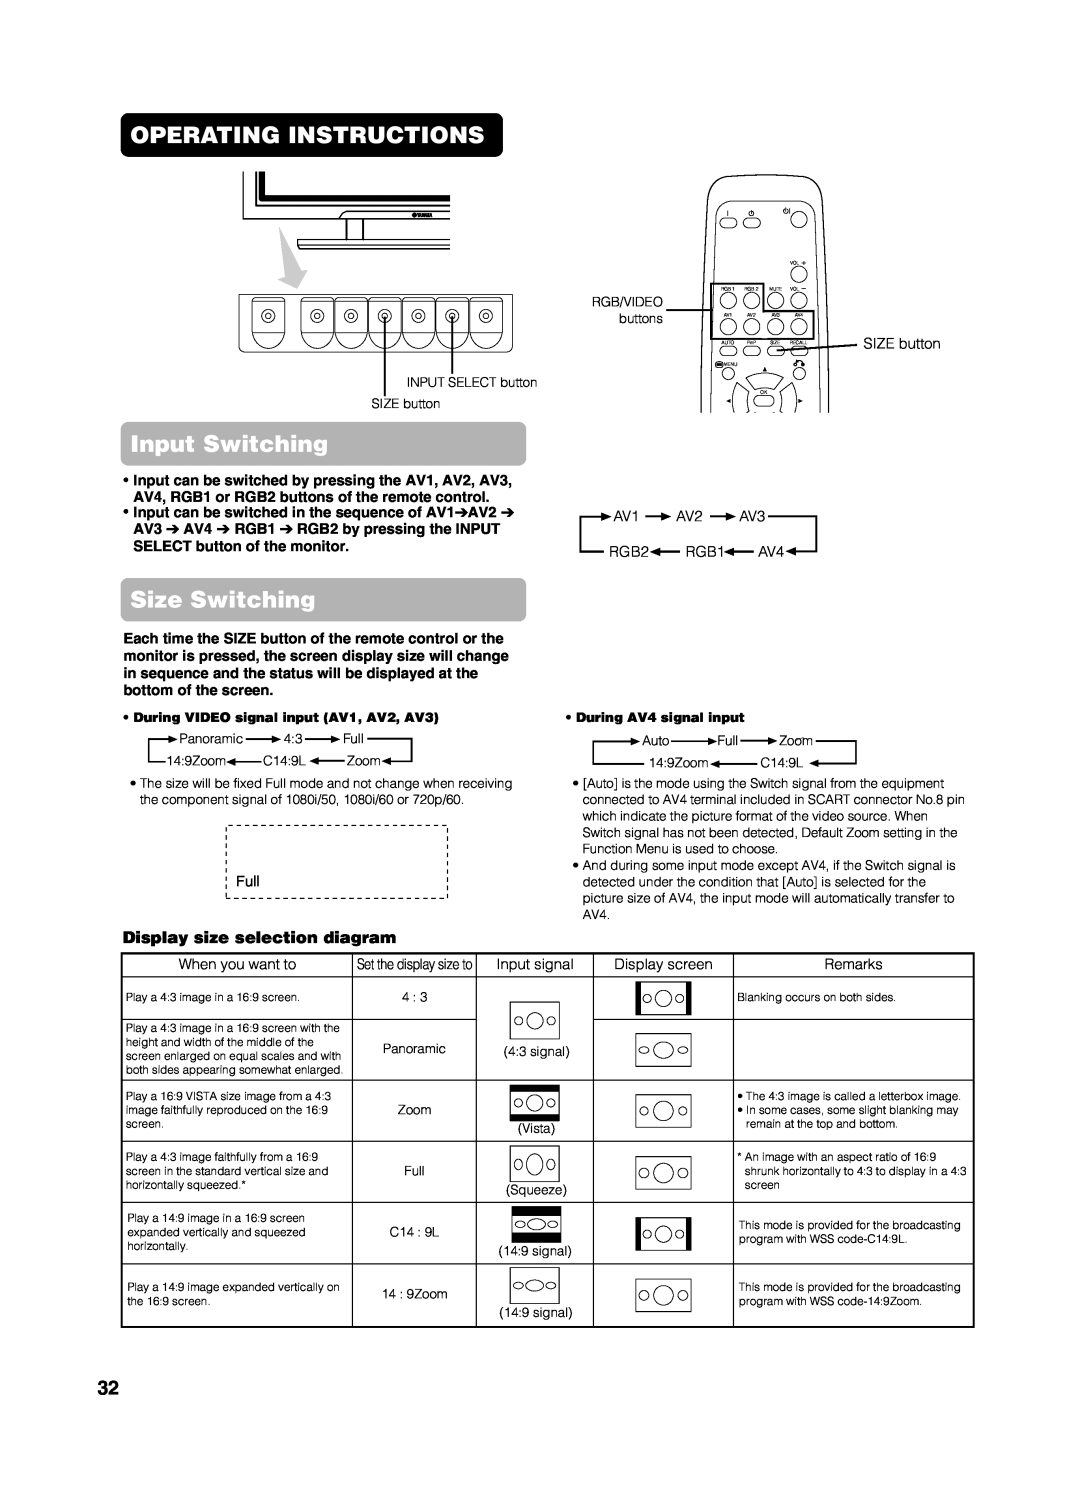 Yamaha PDM-4210E user manual Operating Instructions, Input Switching, Size Switching, Display size selection diagram 